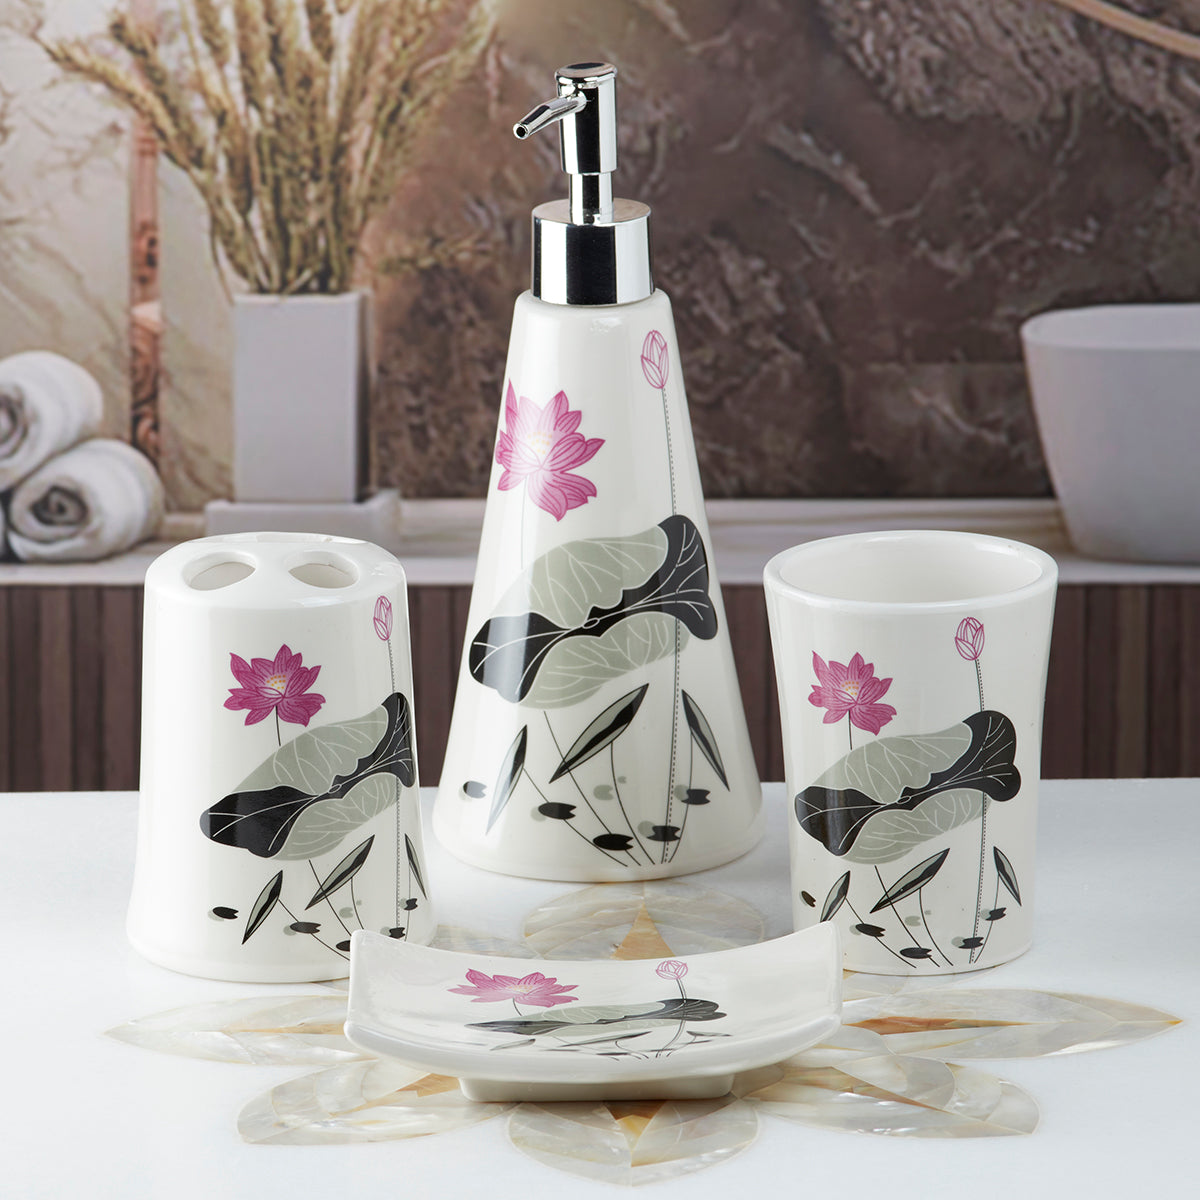 Ceramic Bathroom Accessories Set of 4 Bath Set with Soap Dispenser (10116)